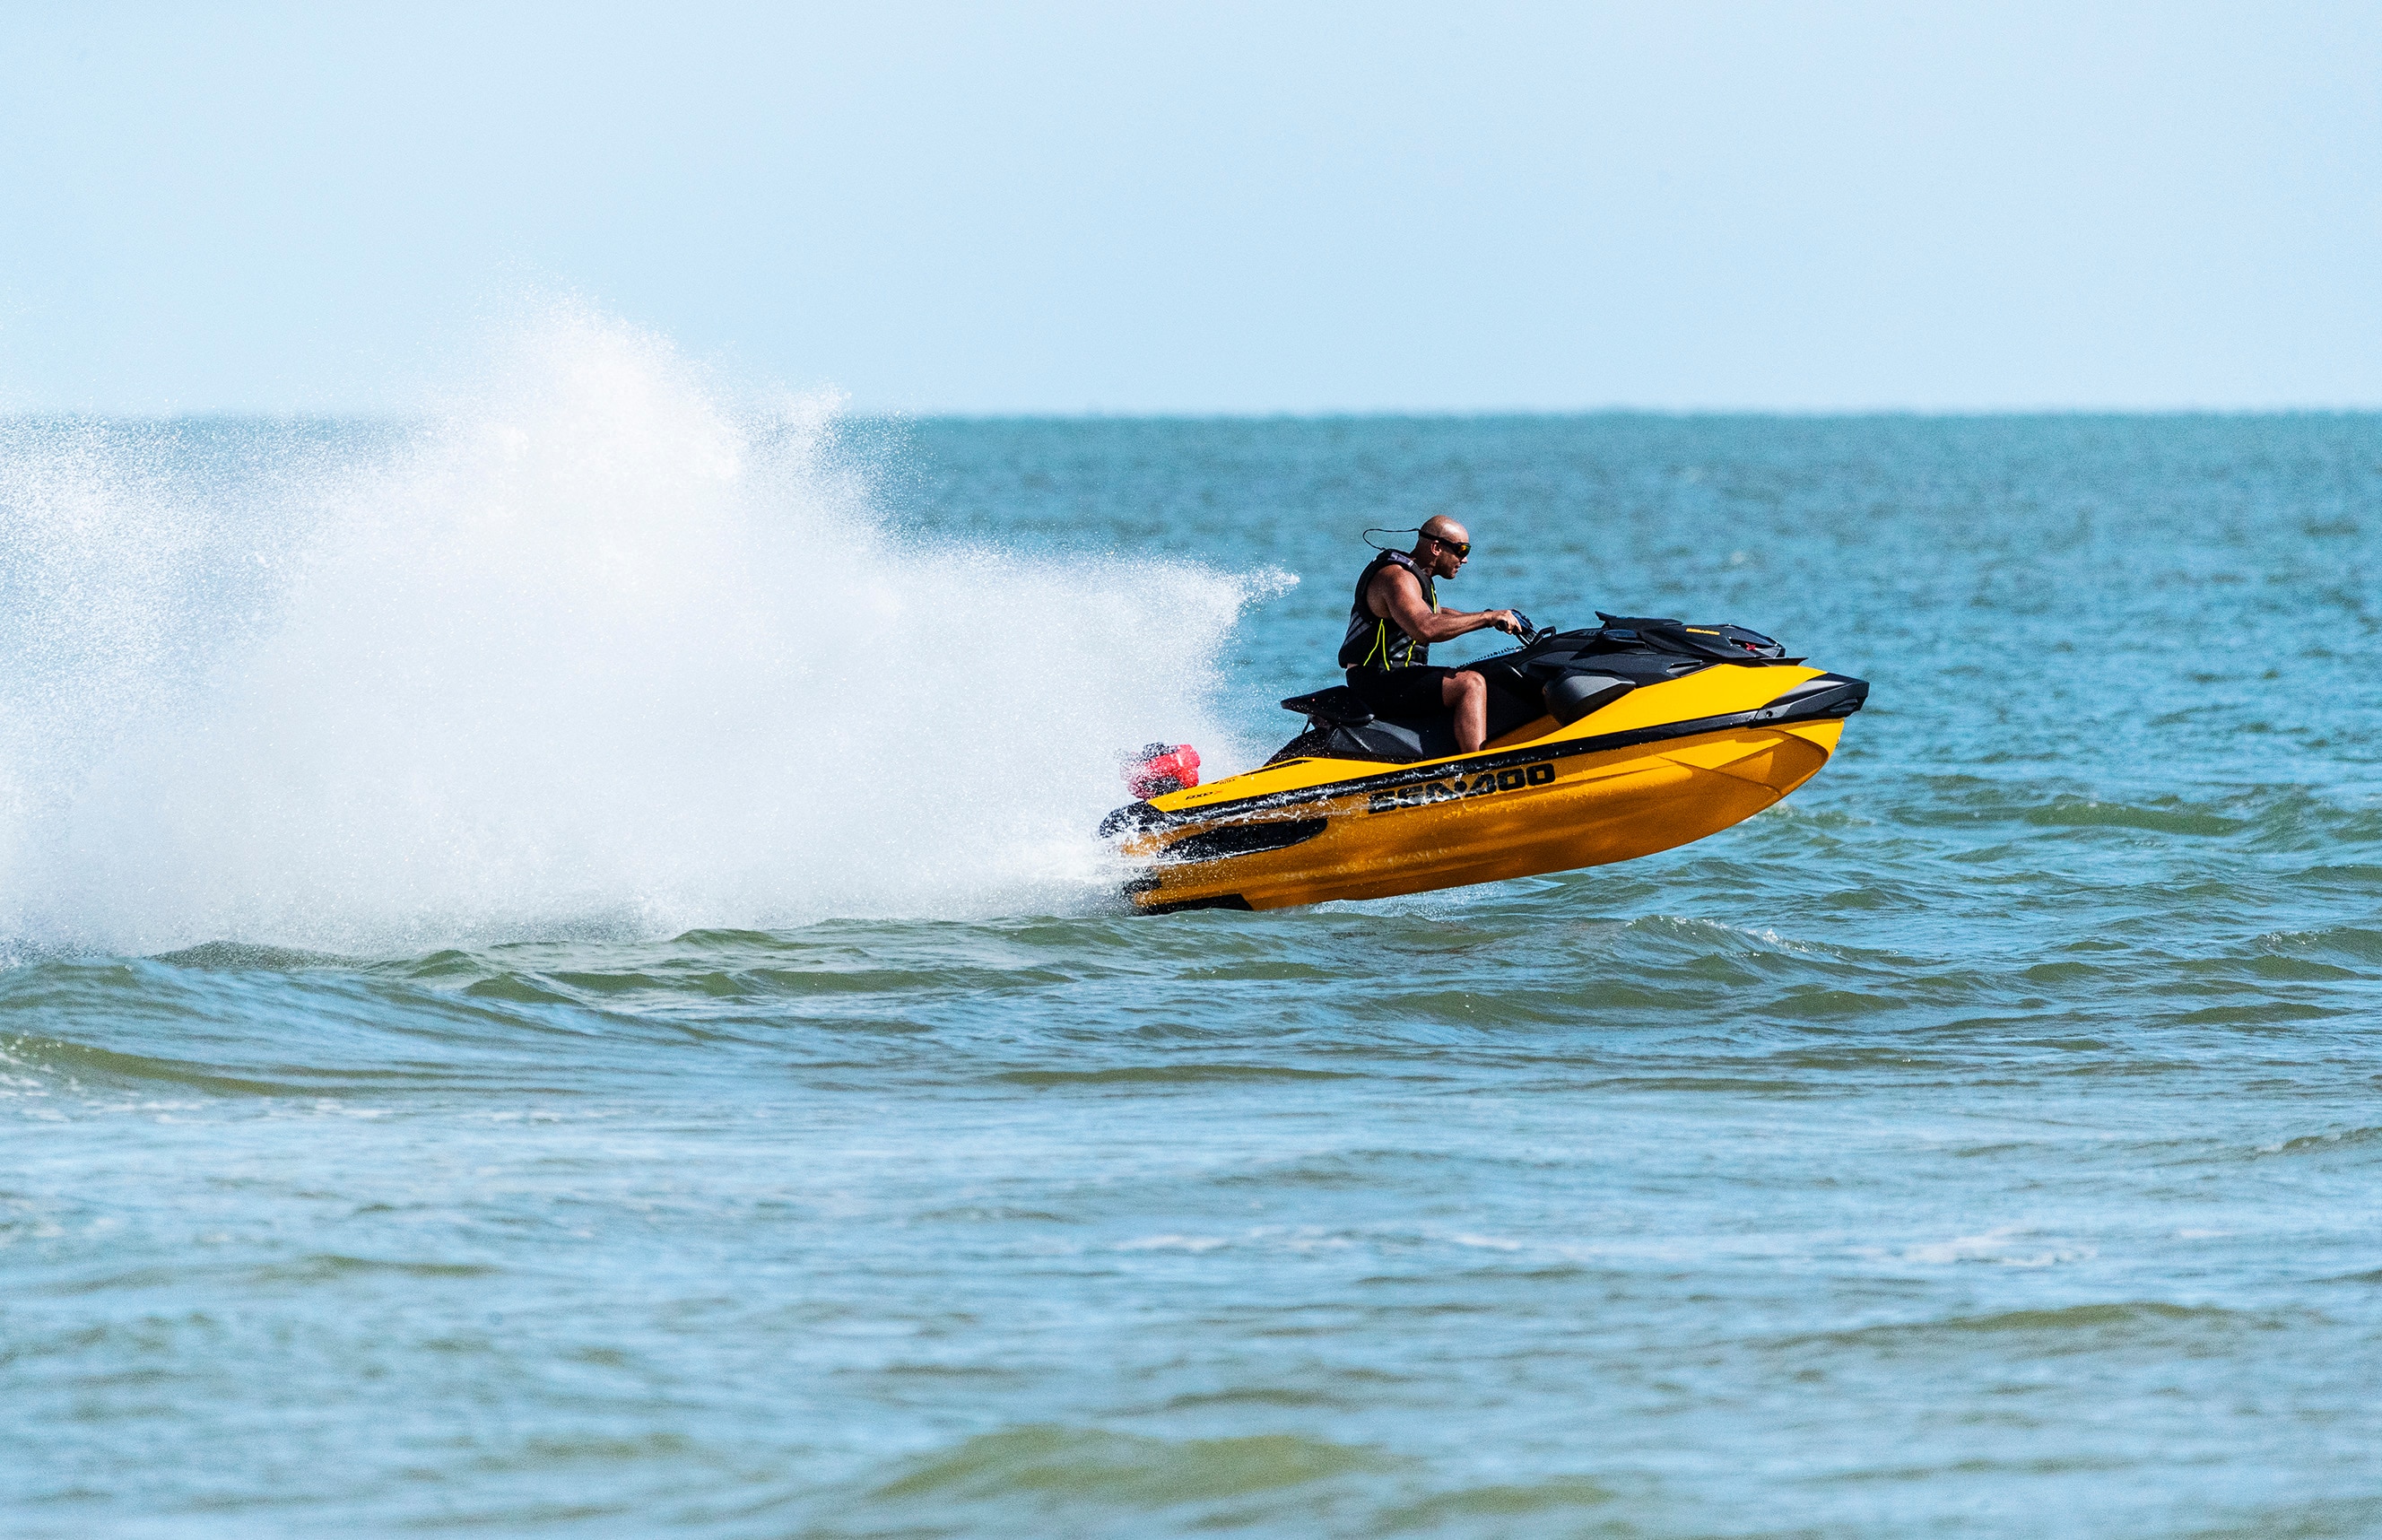 Man riding fast on a Sea-Doo RXP-X